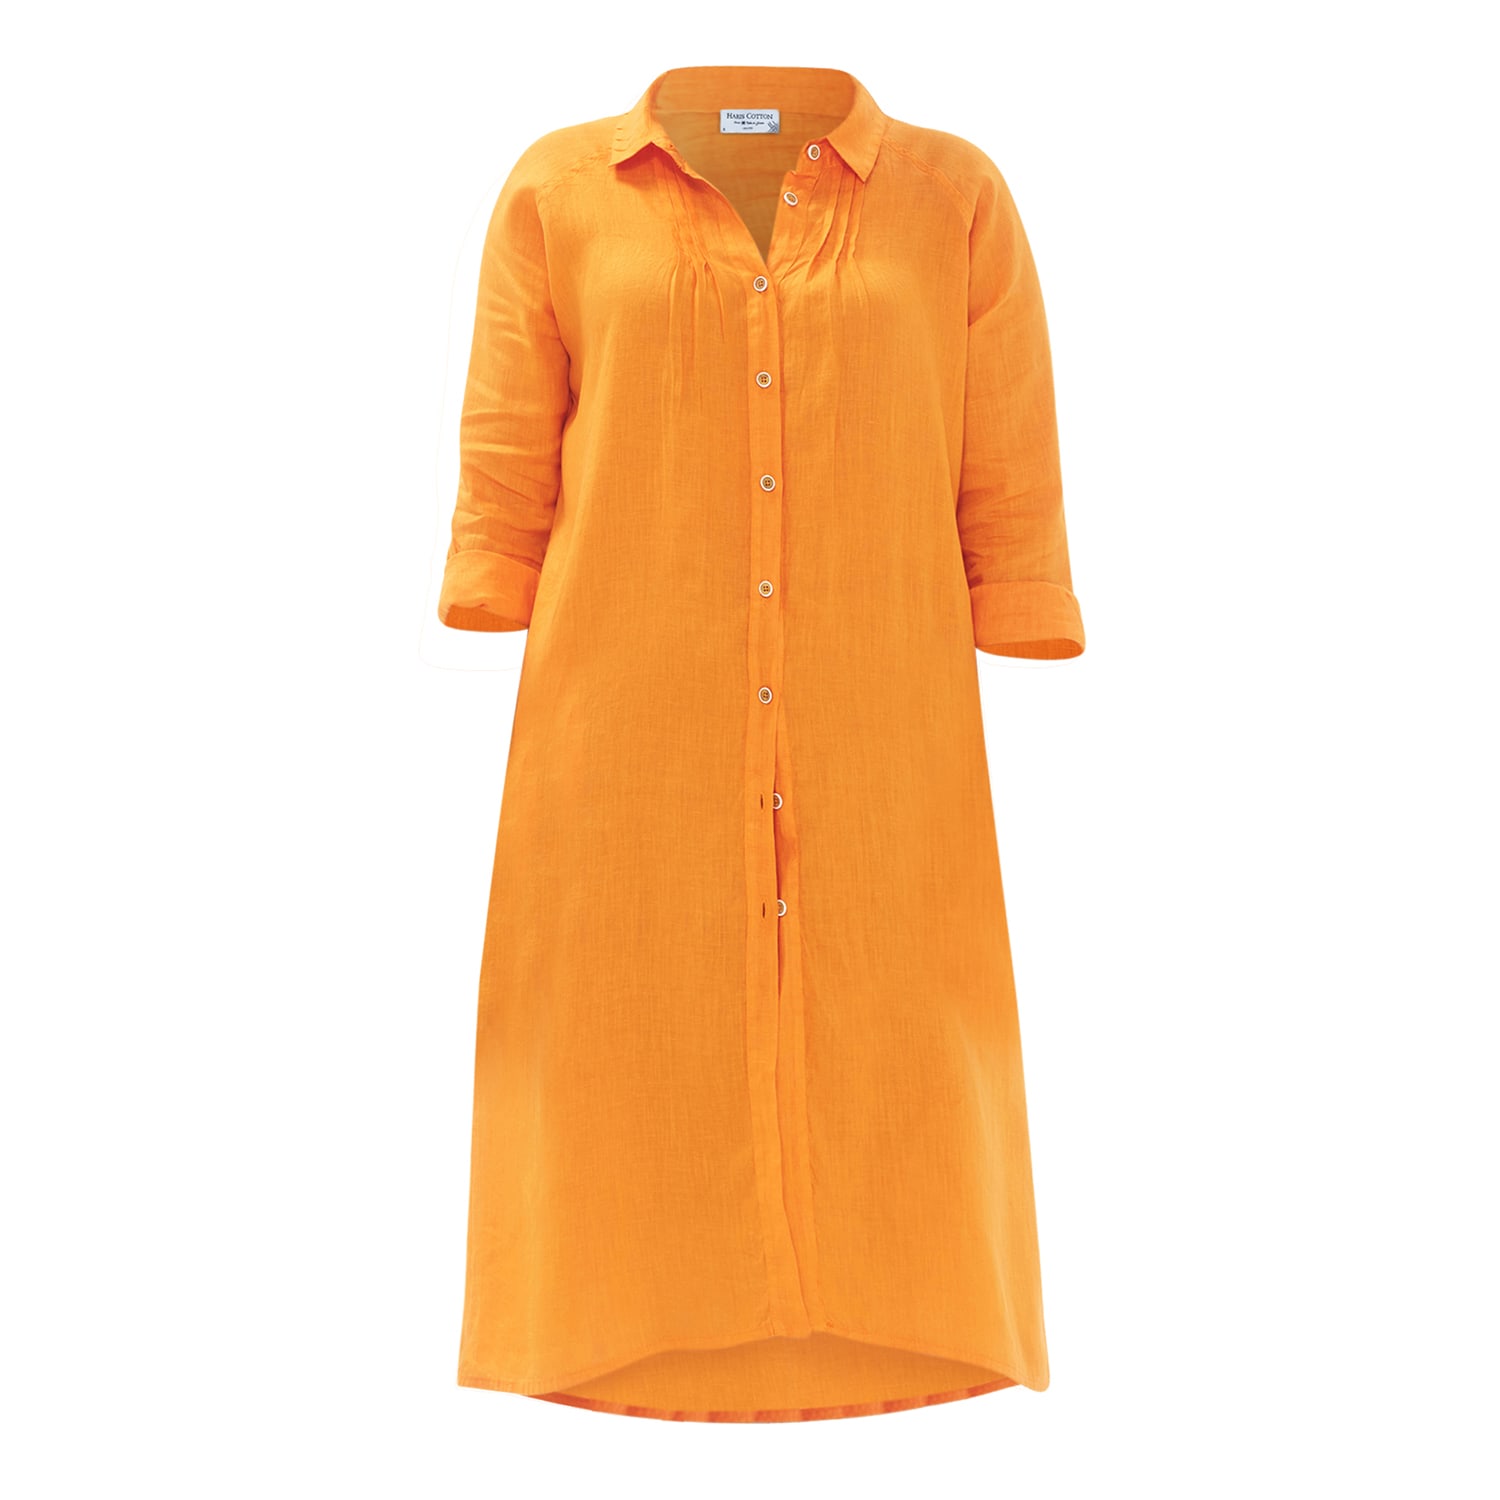 Haris Cotton Women's Yellow / Orange Split Hem Linen Shirt With Drop Sholder - Lotus